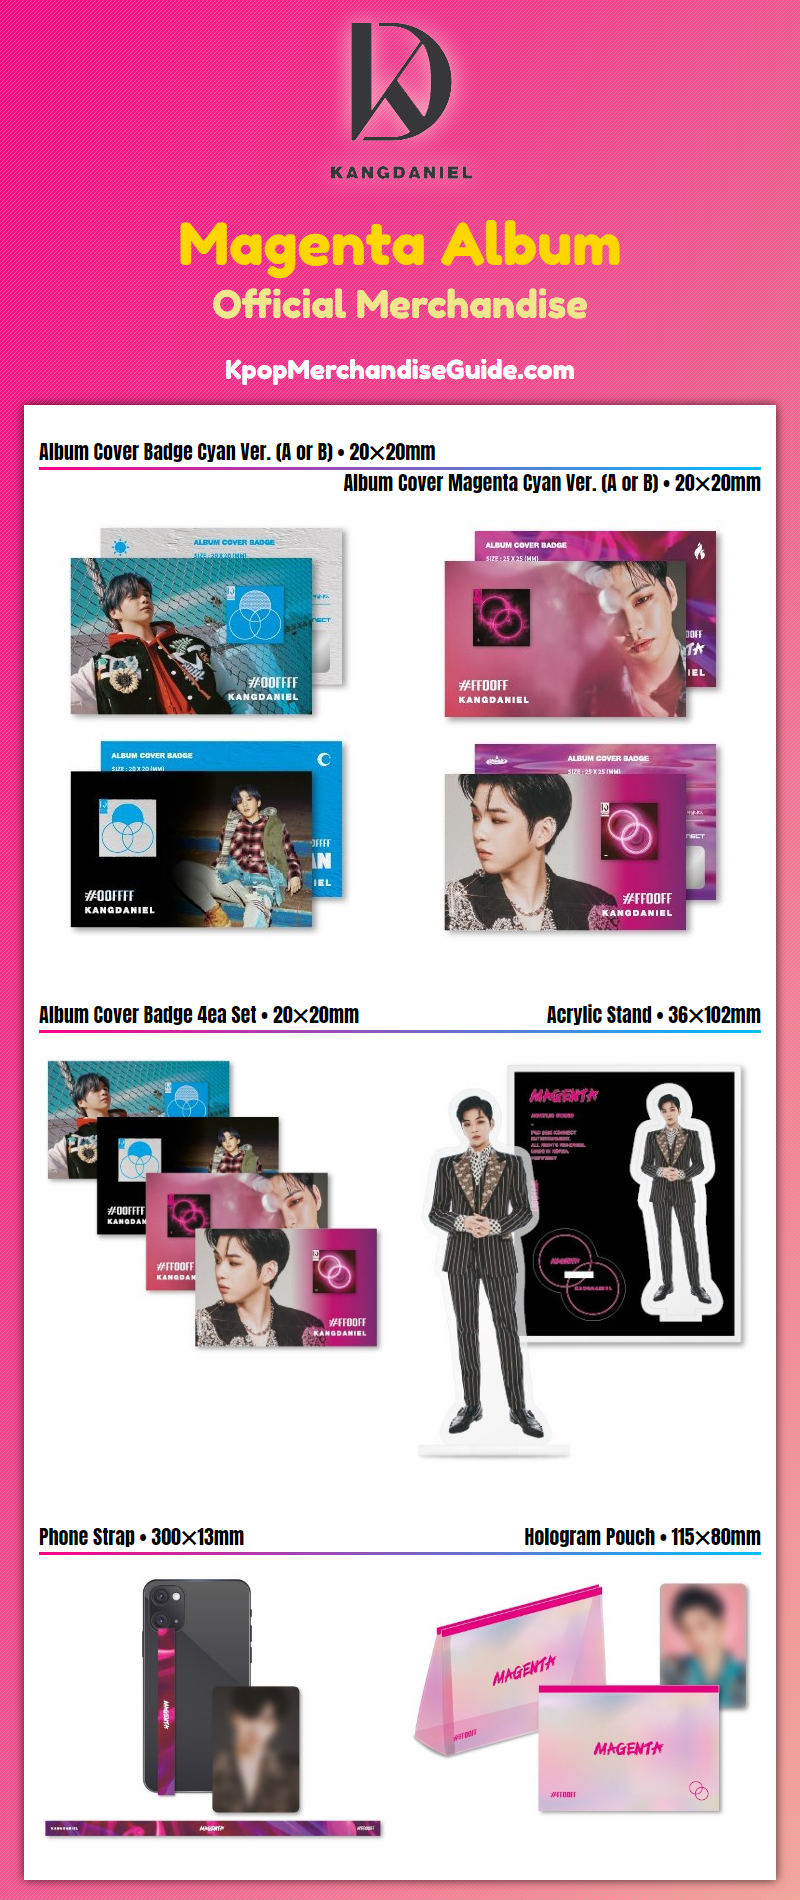 Kang Daniel Magenta Album Merchandise